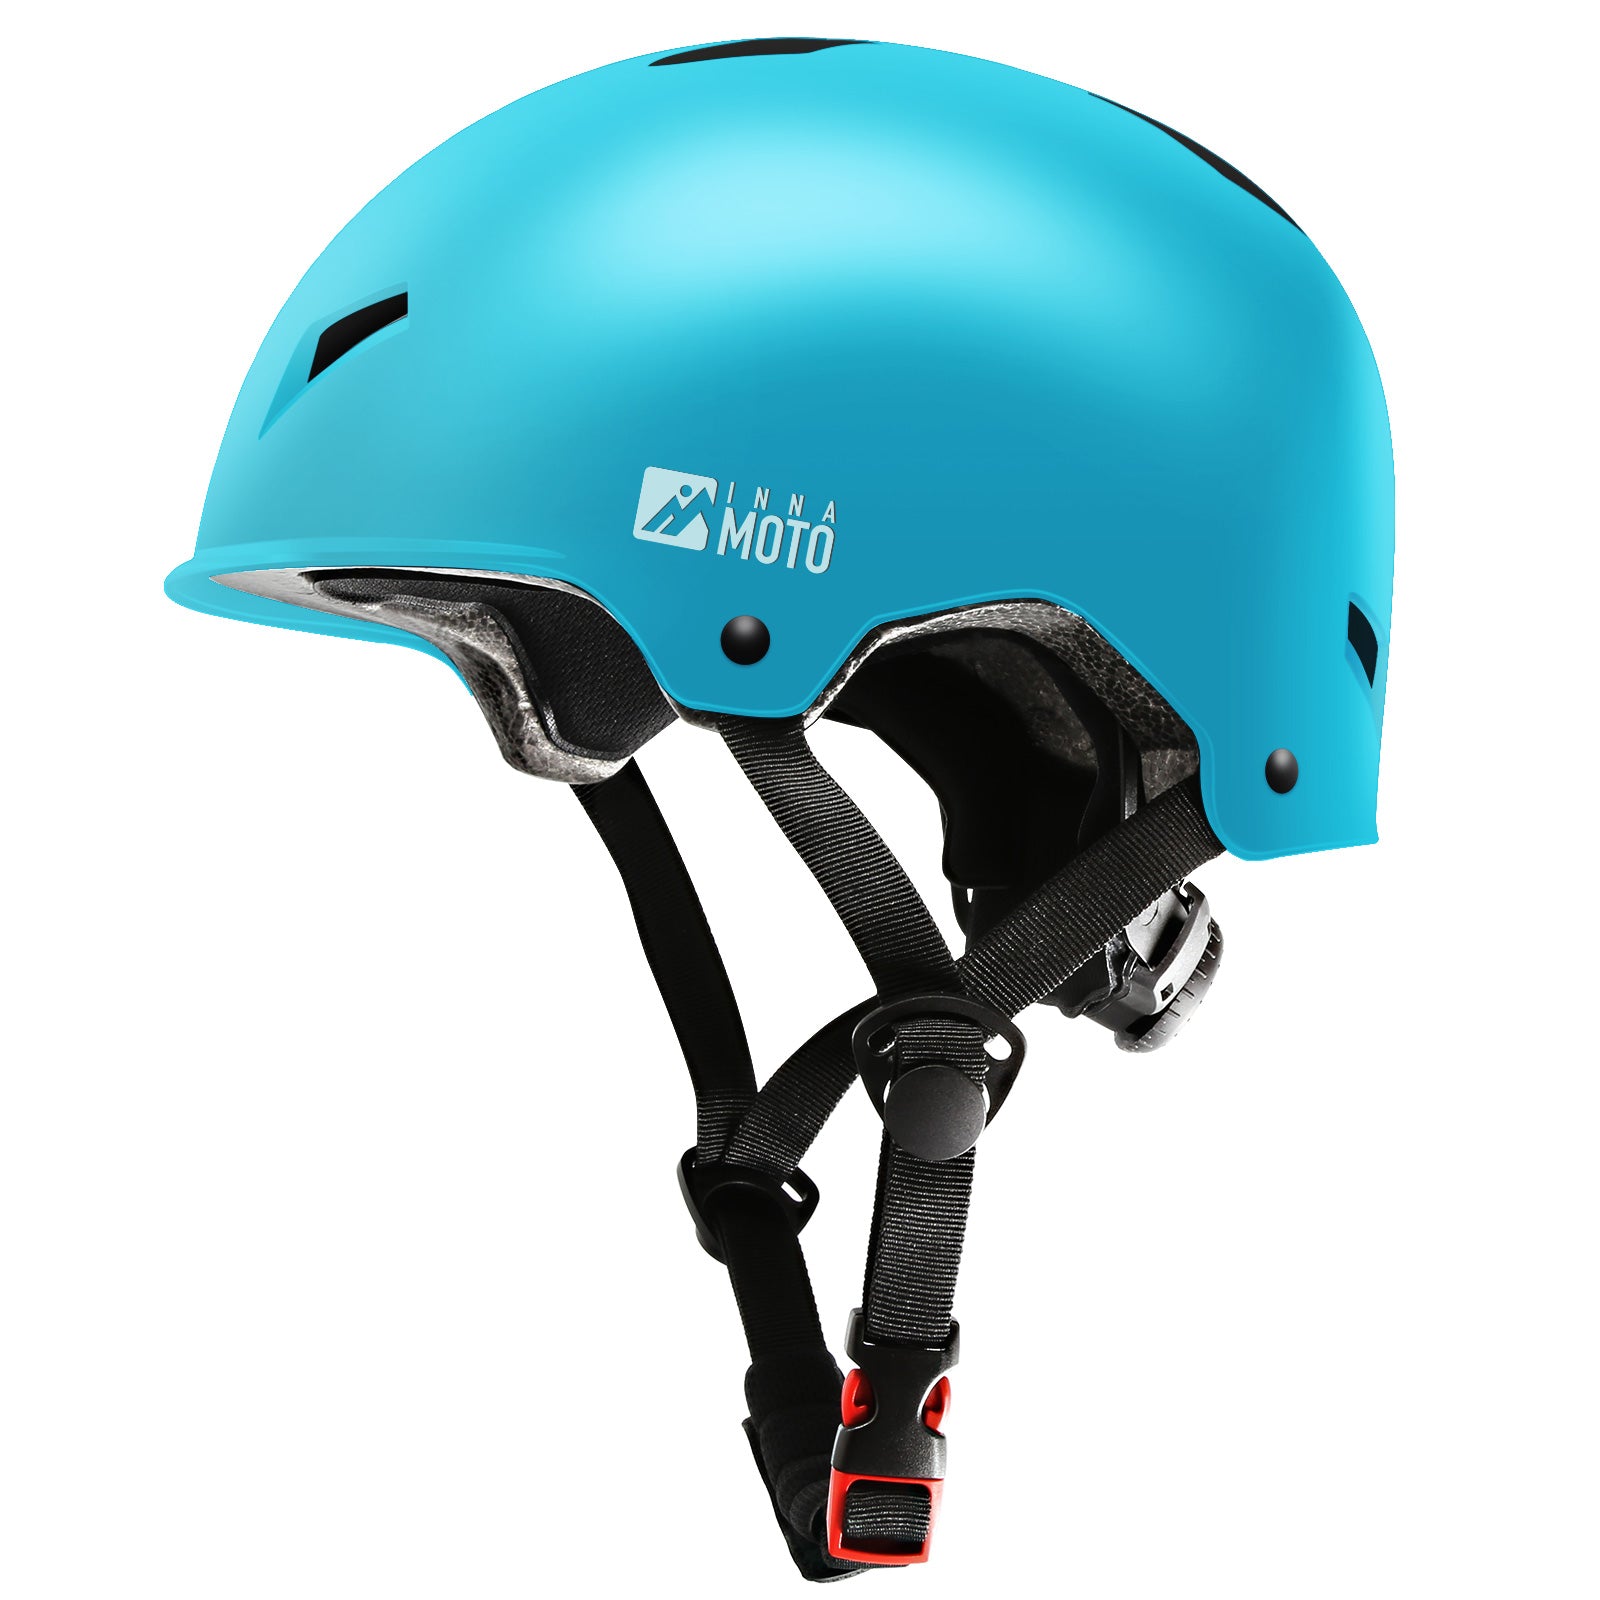 INNAMOTO Adult Skateboard Helmet Lightweight Ajustable Protection for